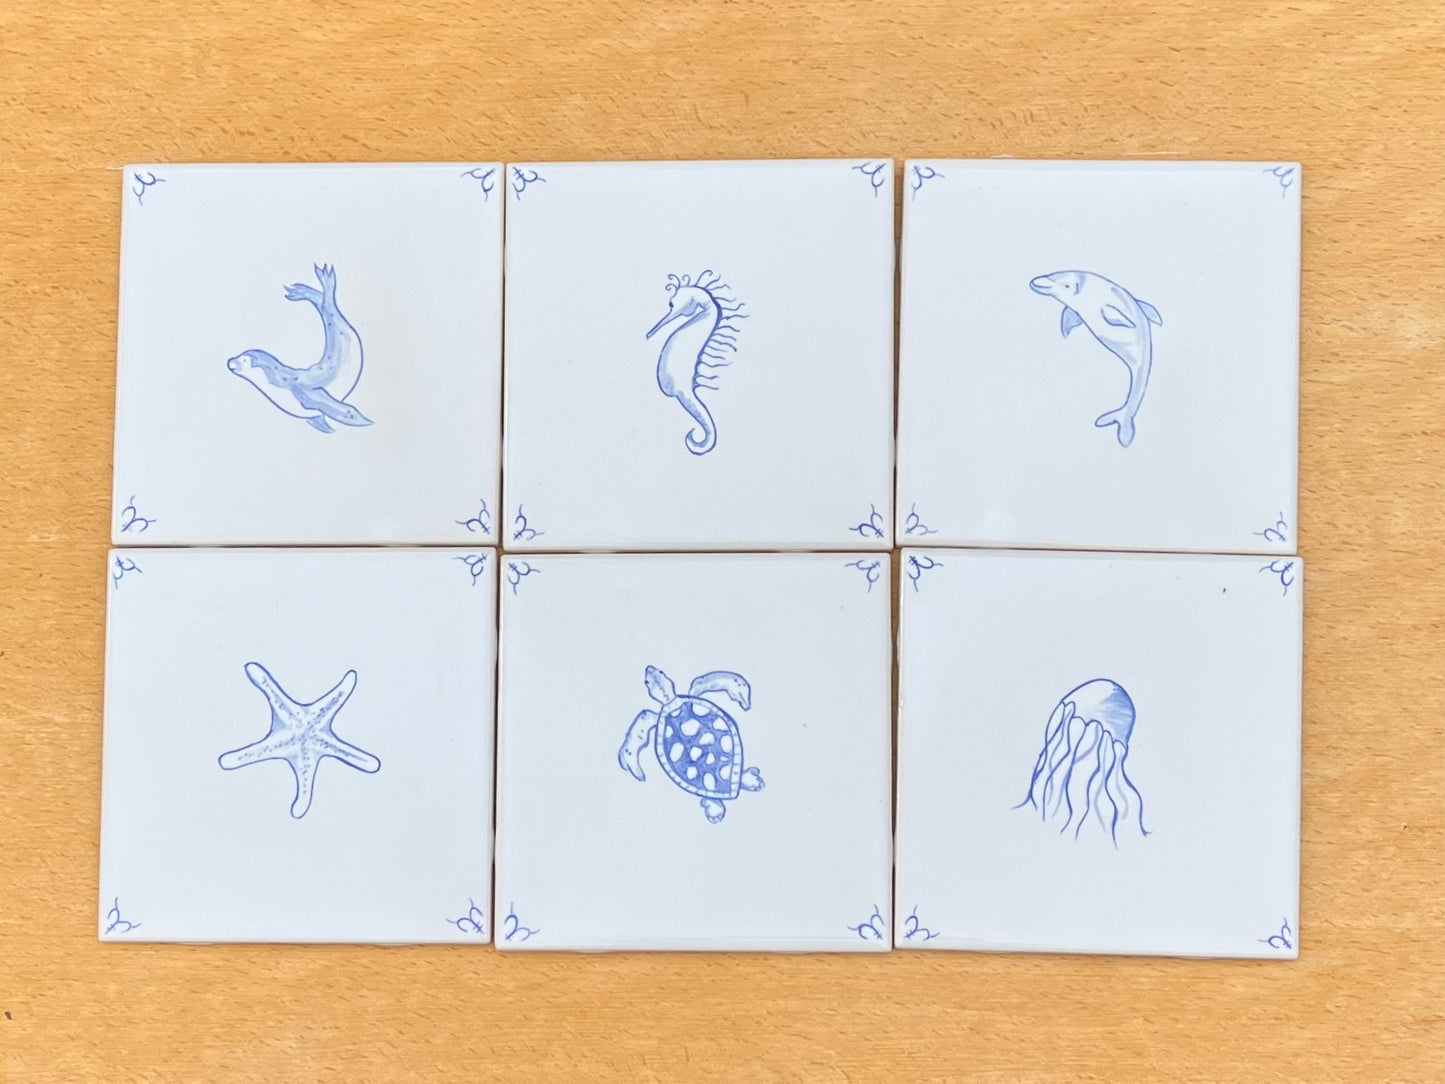 Six Hand painted Delft style tiles for backsplash - 6" tiles - Sea creatures motif